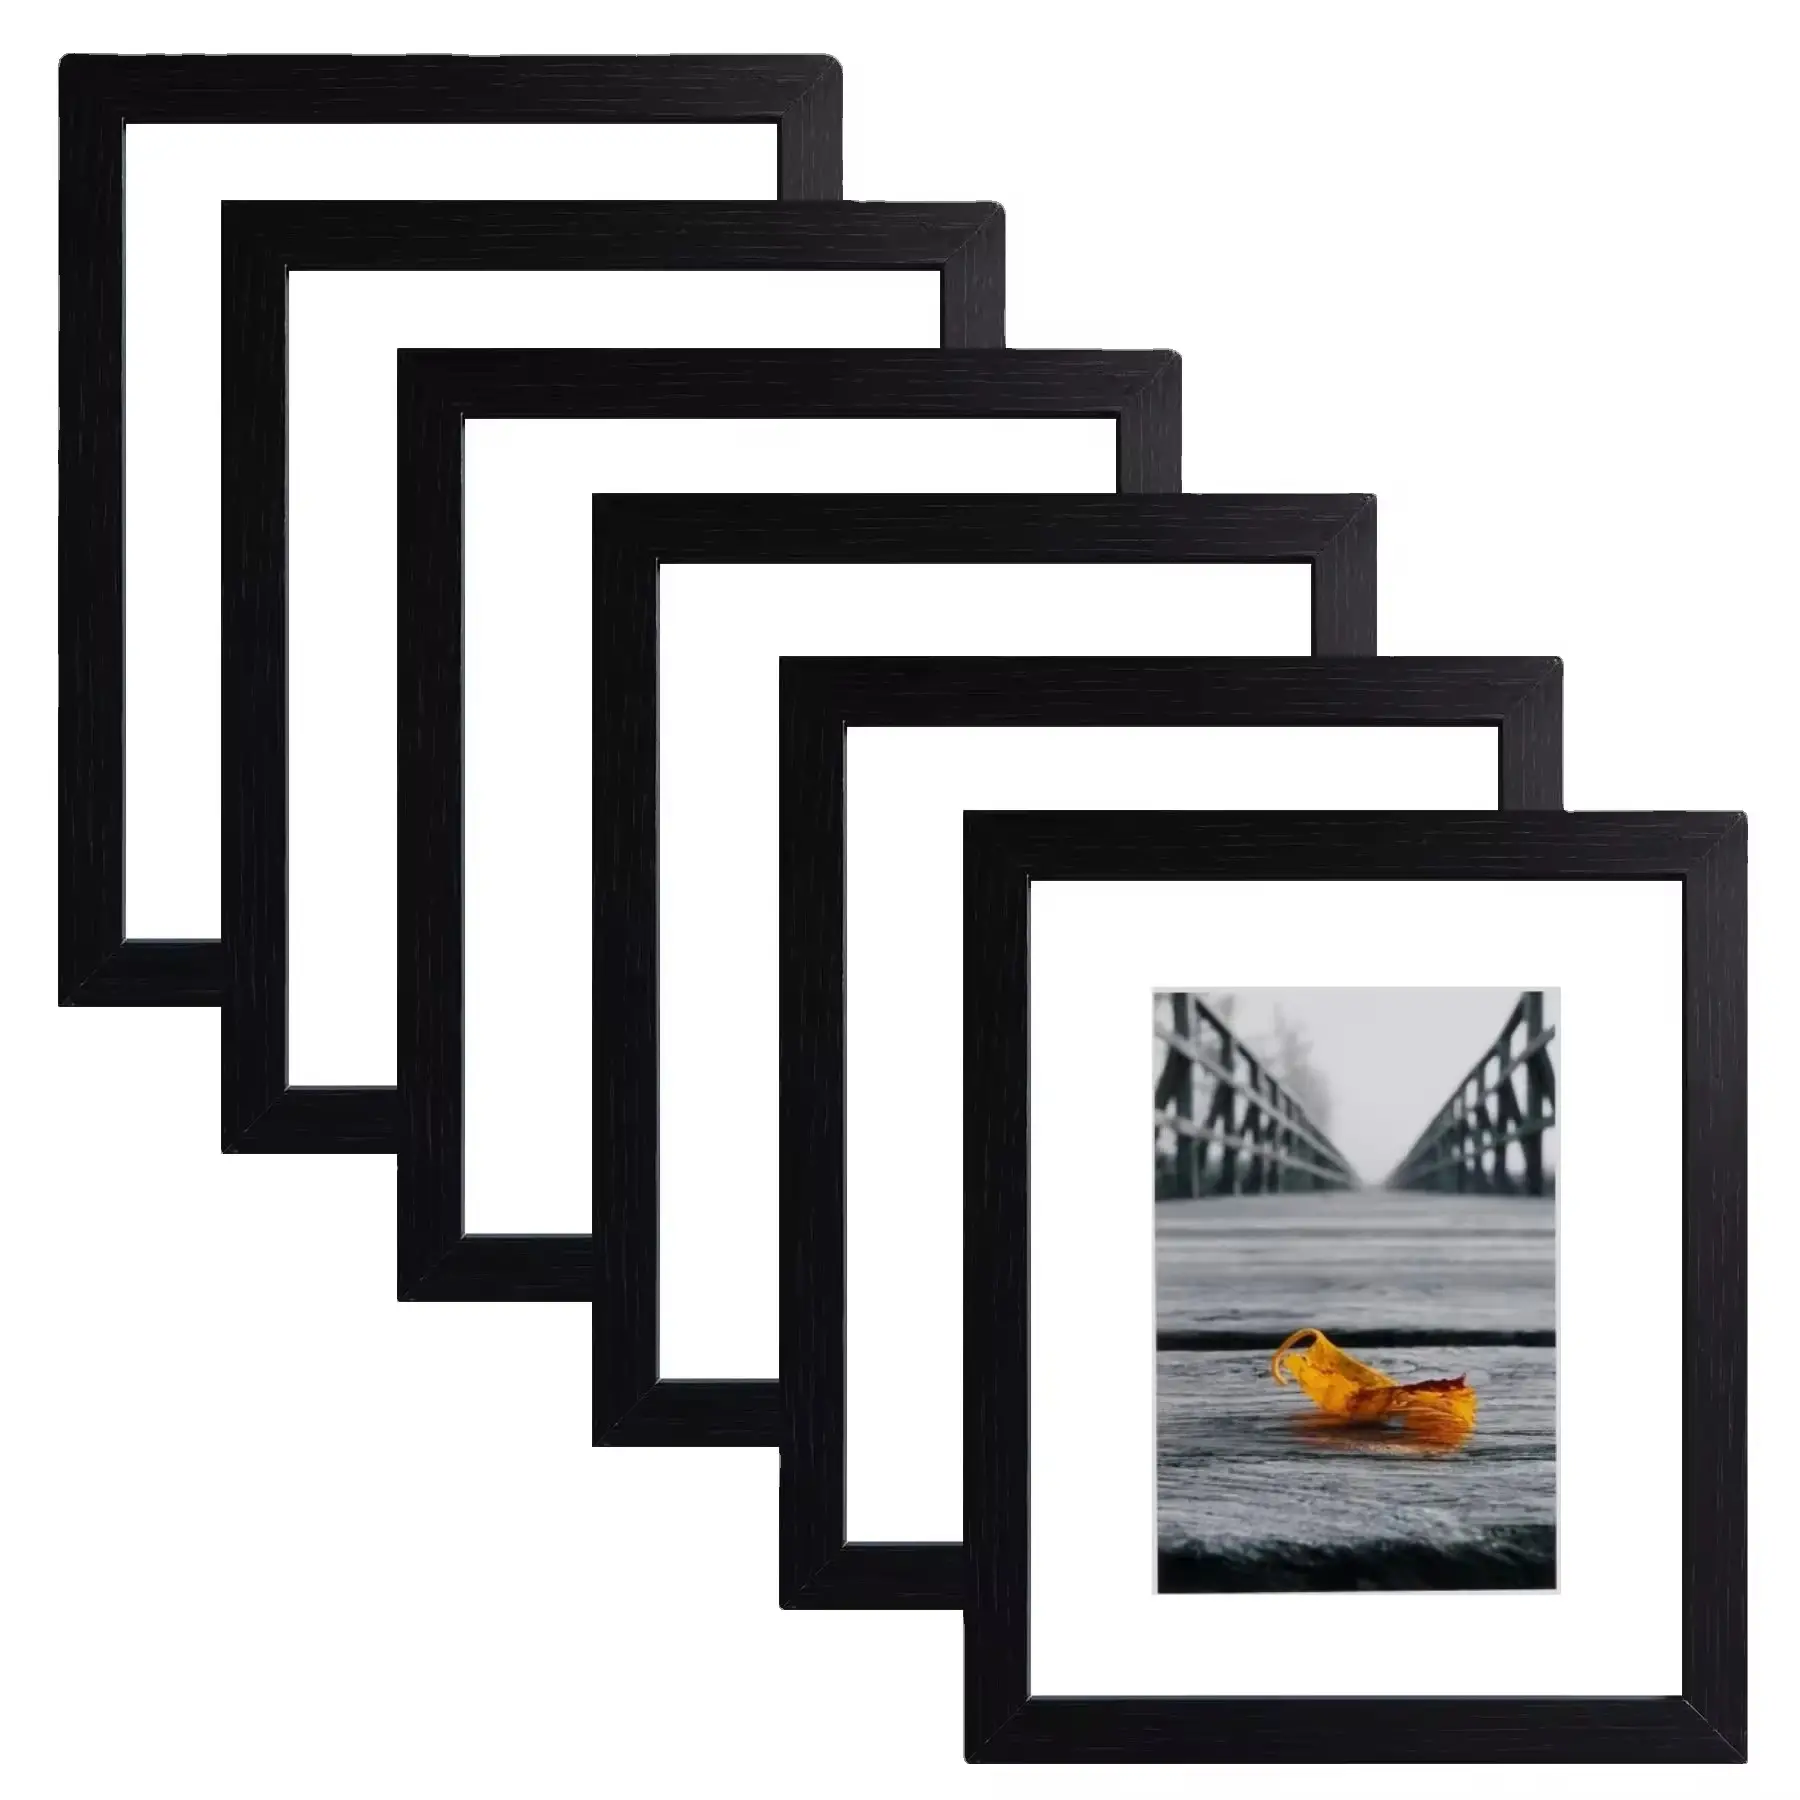 Personalizado barato A1,A2,A3,A4,A5,4x6,5x7,6x8,8x10,11x14,12x16,12x18,16x20,18x24,24x36 negro blanco póster imagen marco de fotos de madera